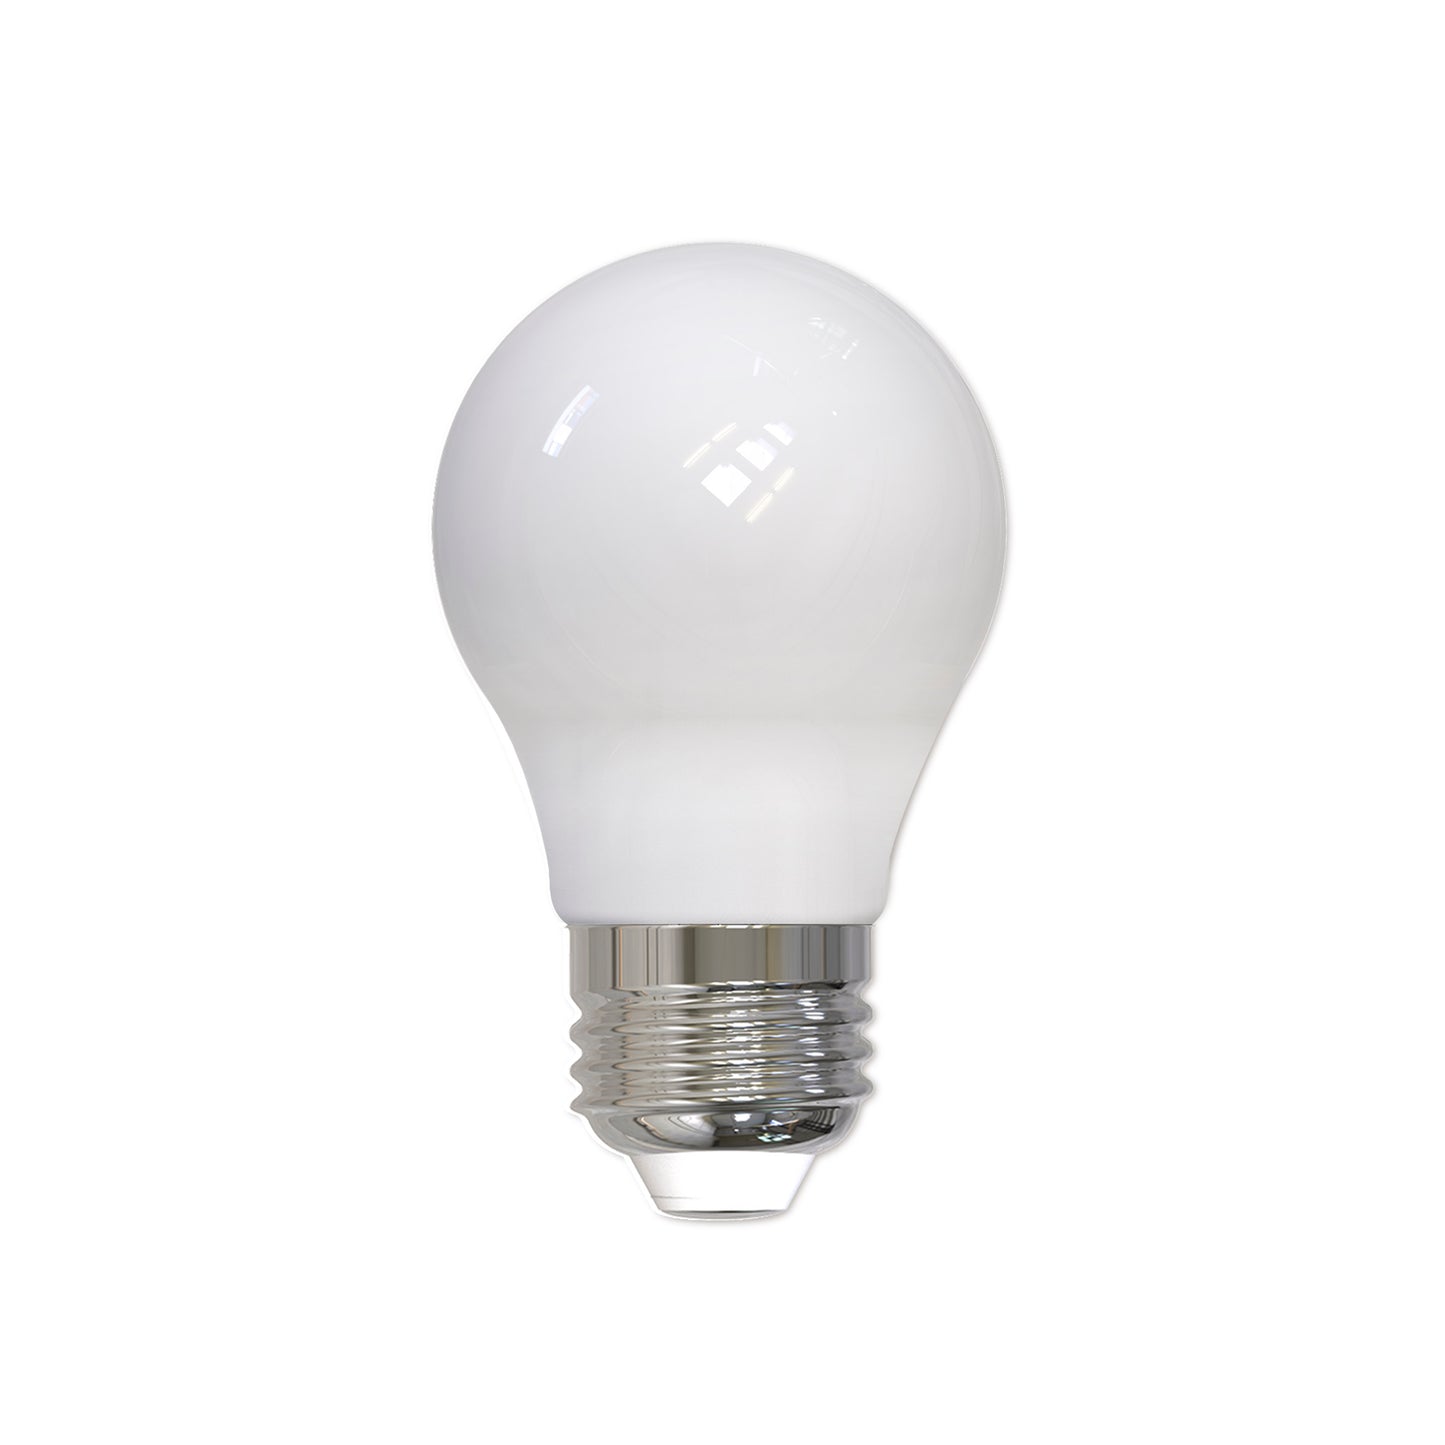 776641 - Filaments Dimmable Milky Glass A15 LED Light Bulb - 7 Watt - 2700K - 4 Pack